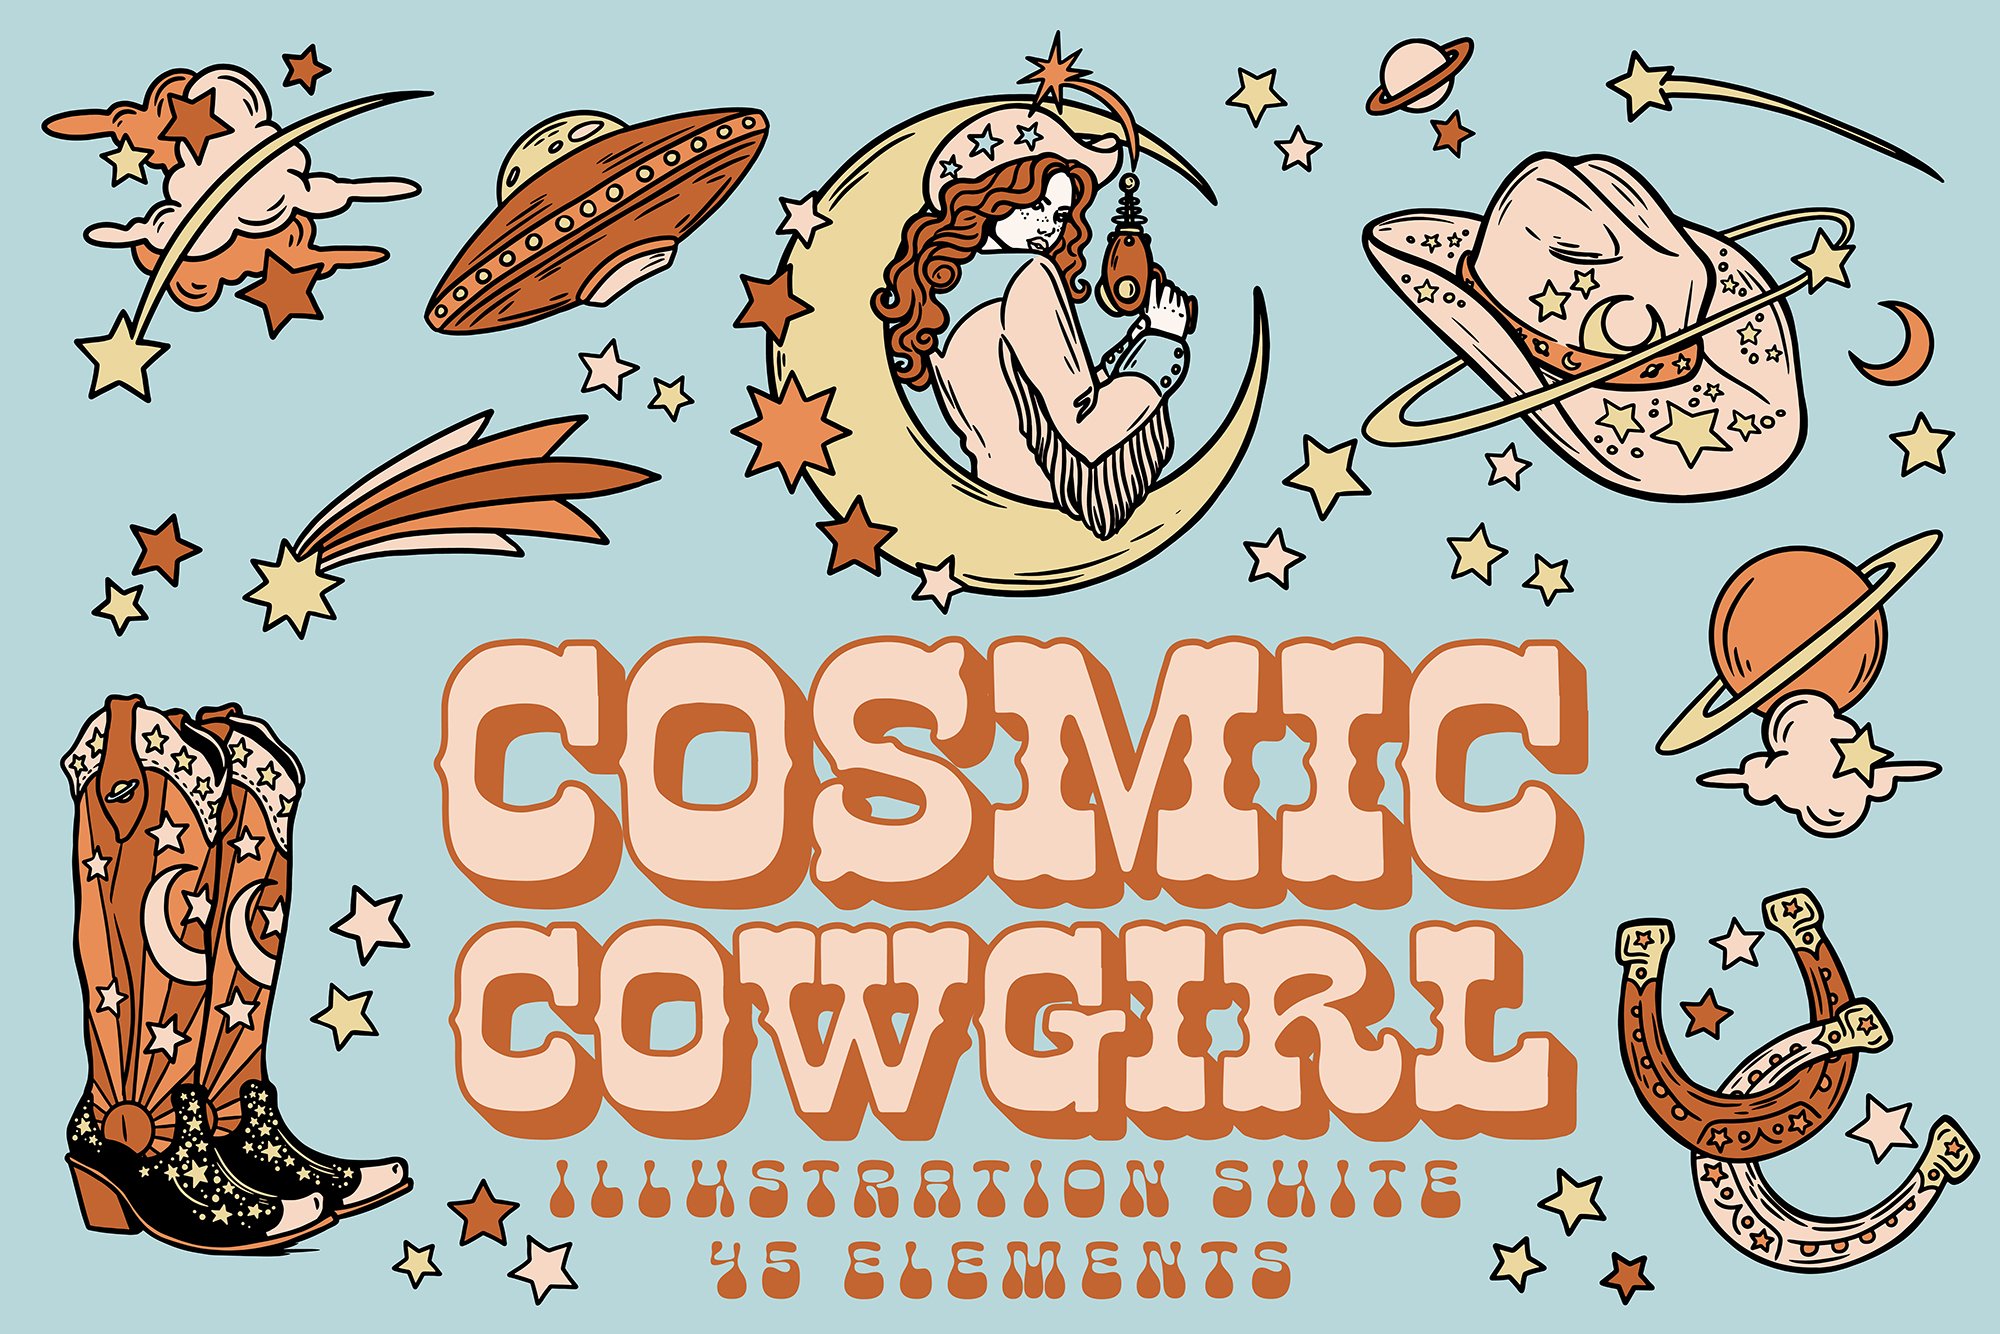 Cosmic-cowgirl-marketing-06web.jpg